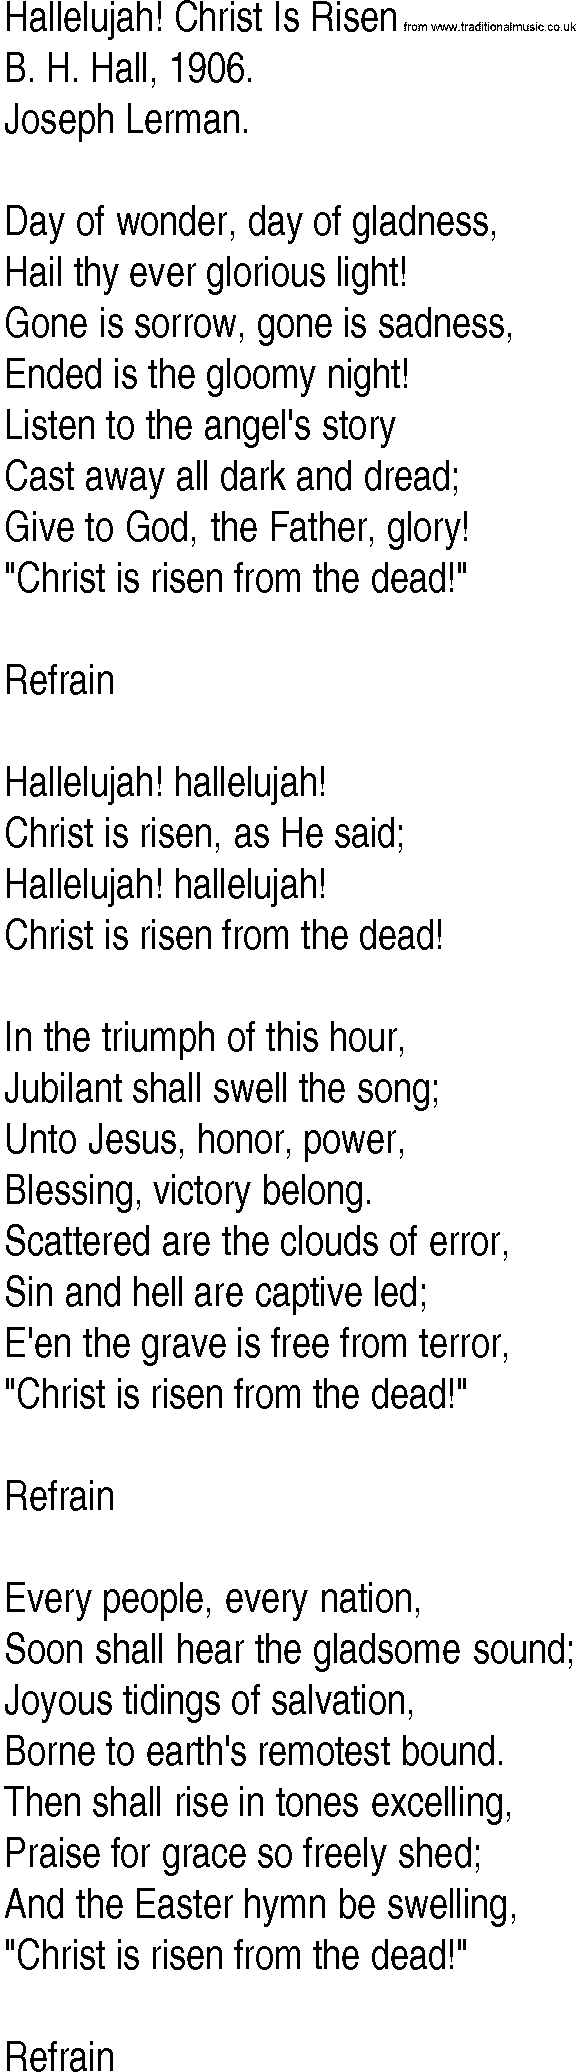 Hymn and Gospel Song: Hallelujah! Christ Is Risen by B H Hall lyrics